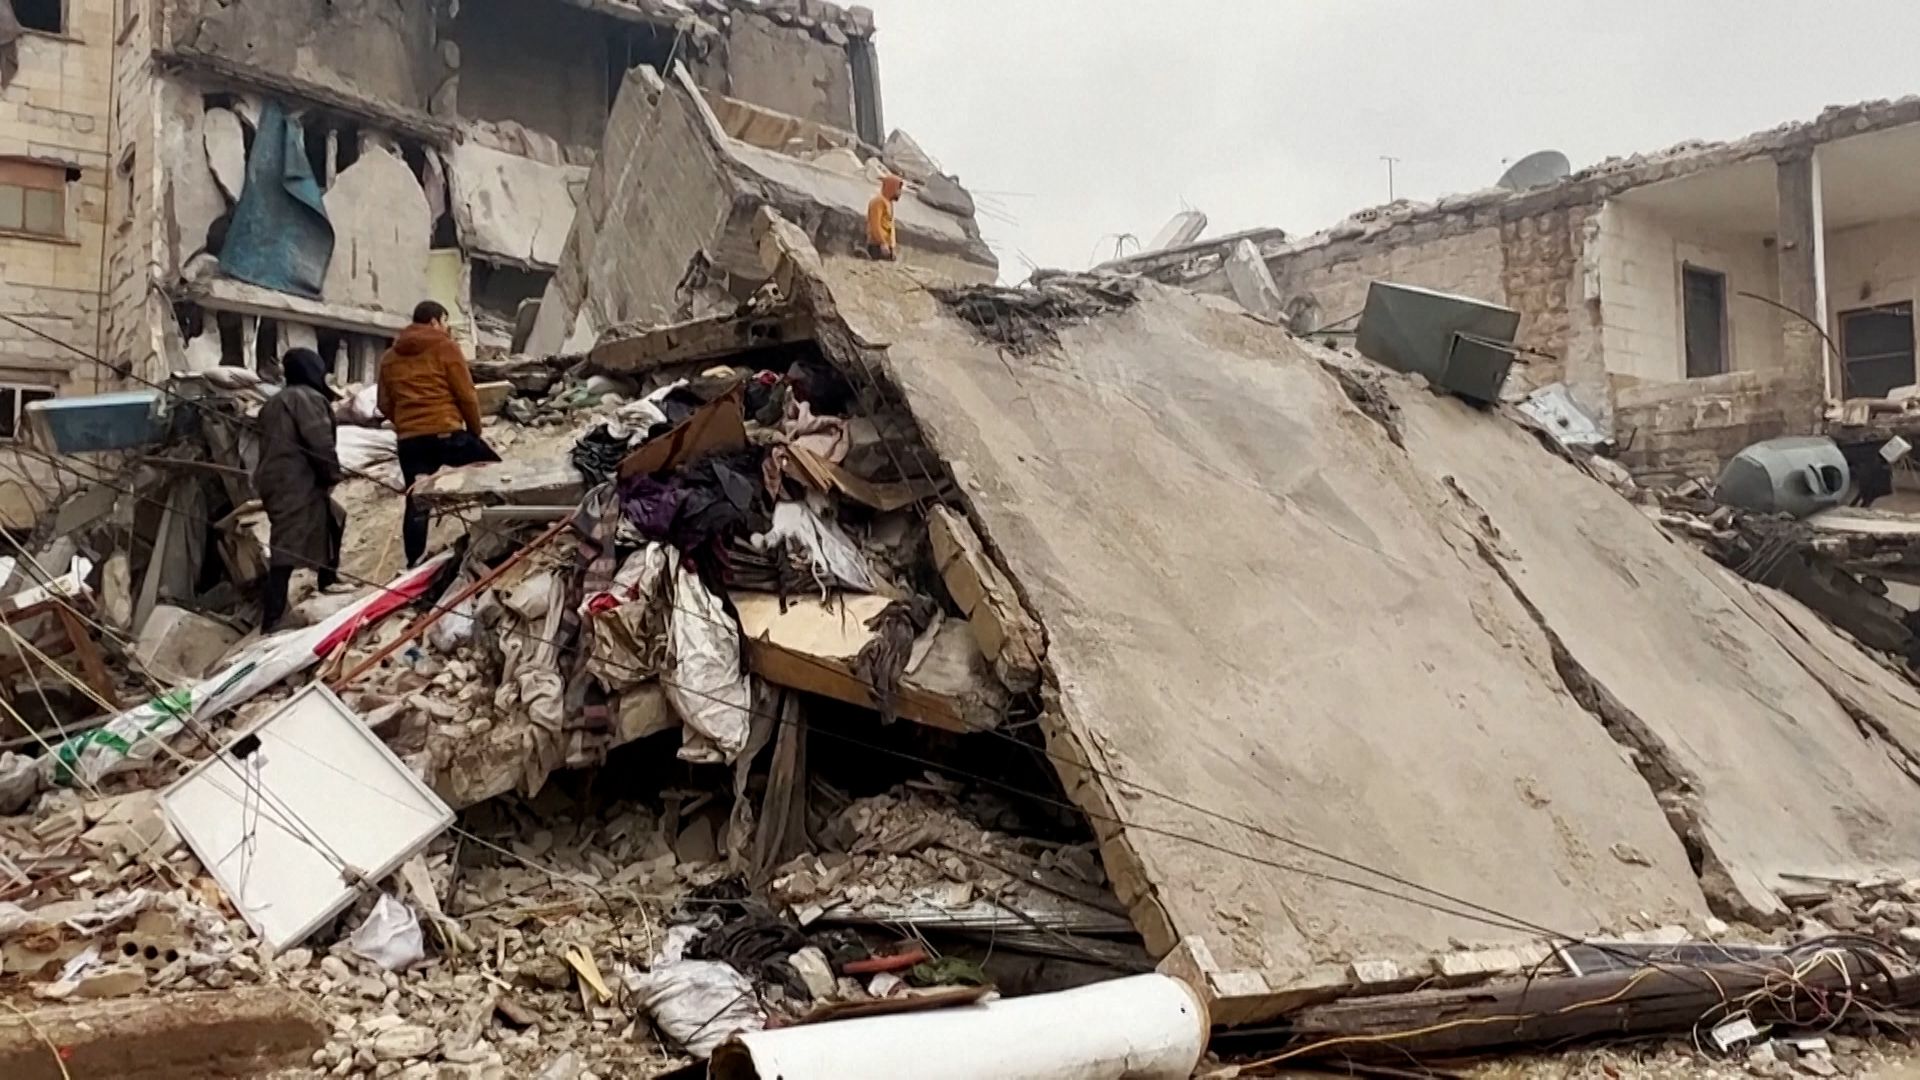 Video: Earthquake leaves trail of destruction in Turkey, Syria | CNN